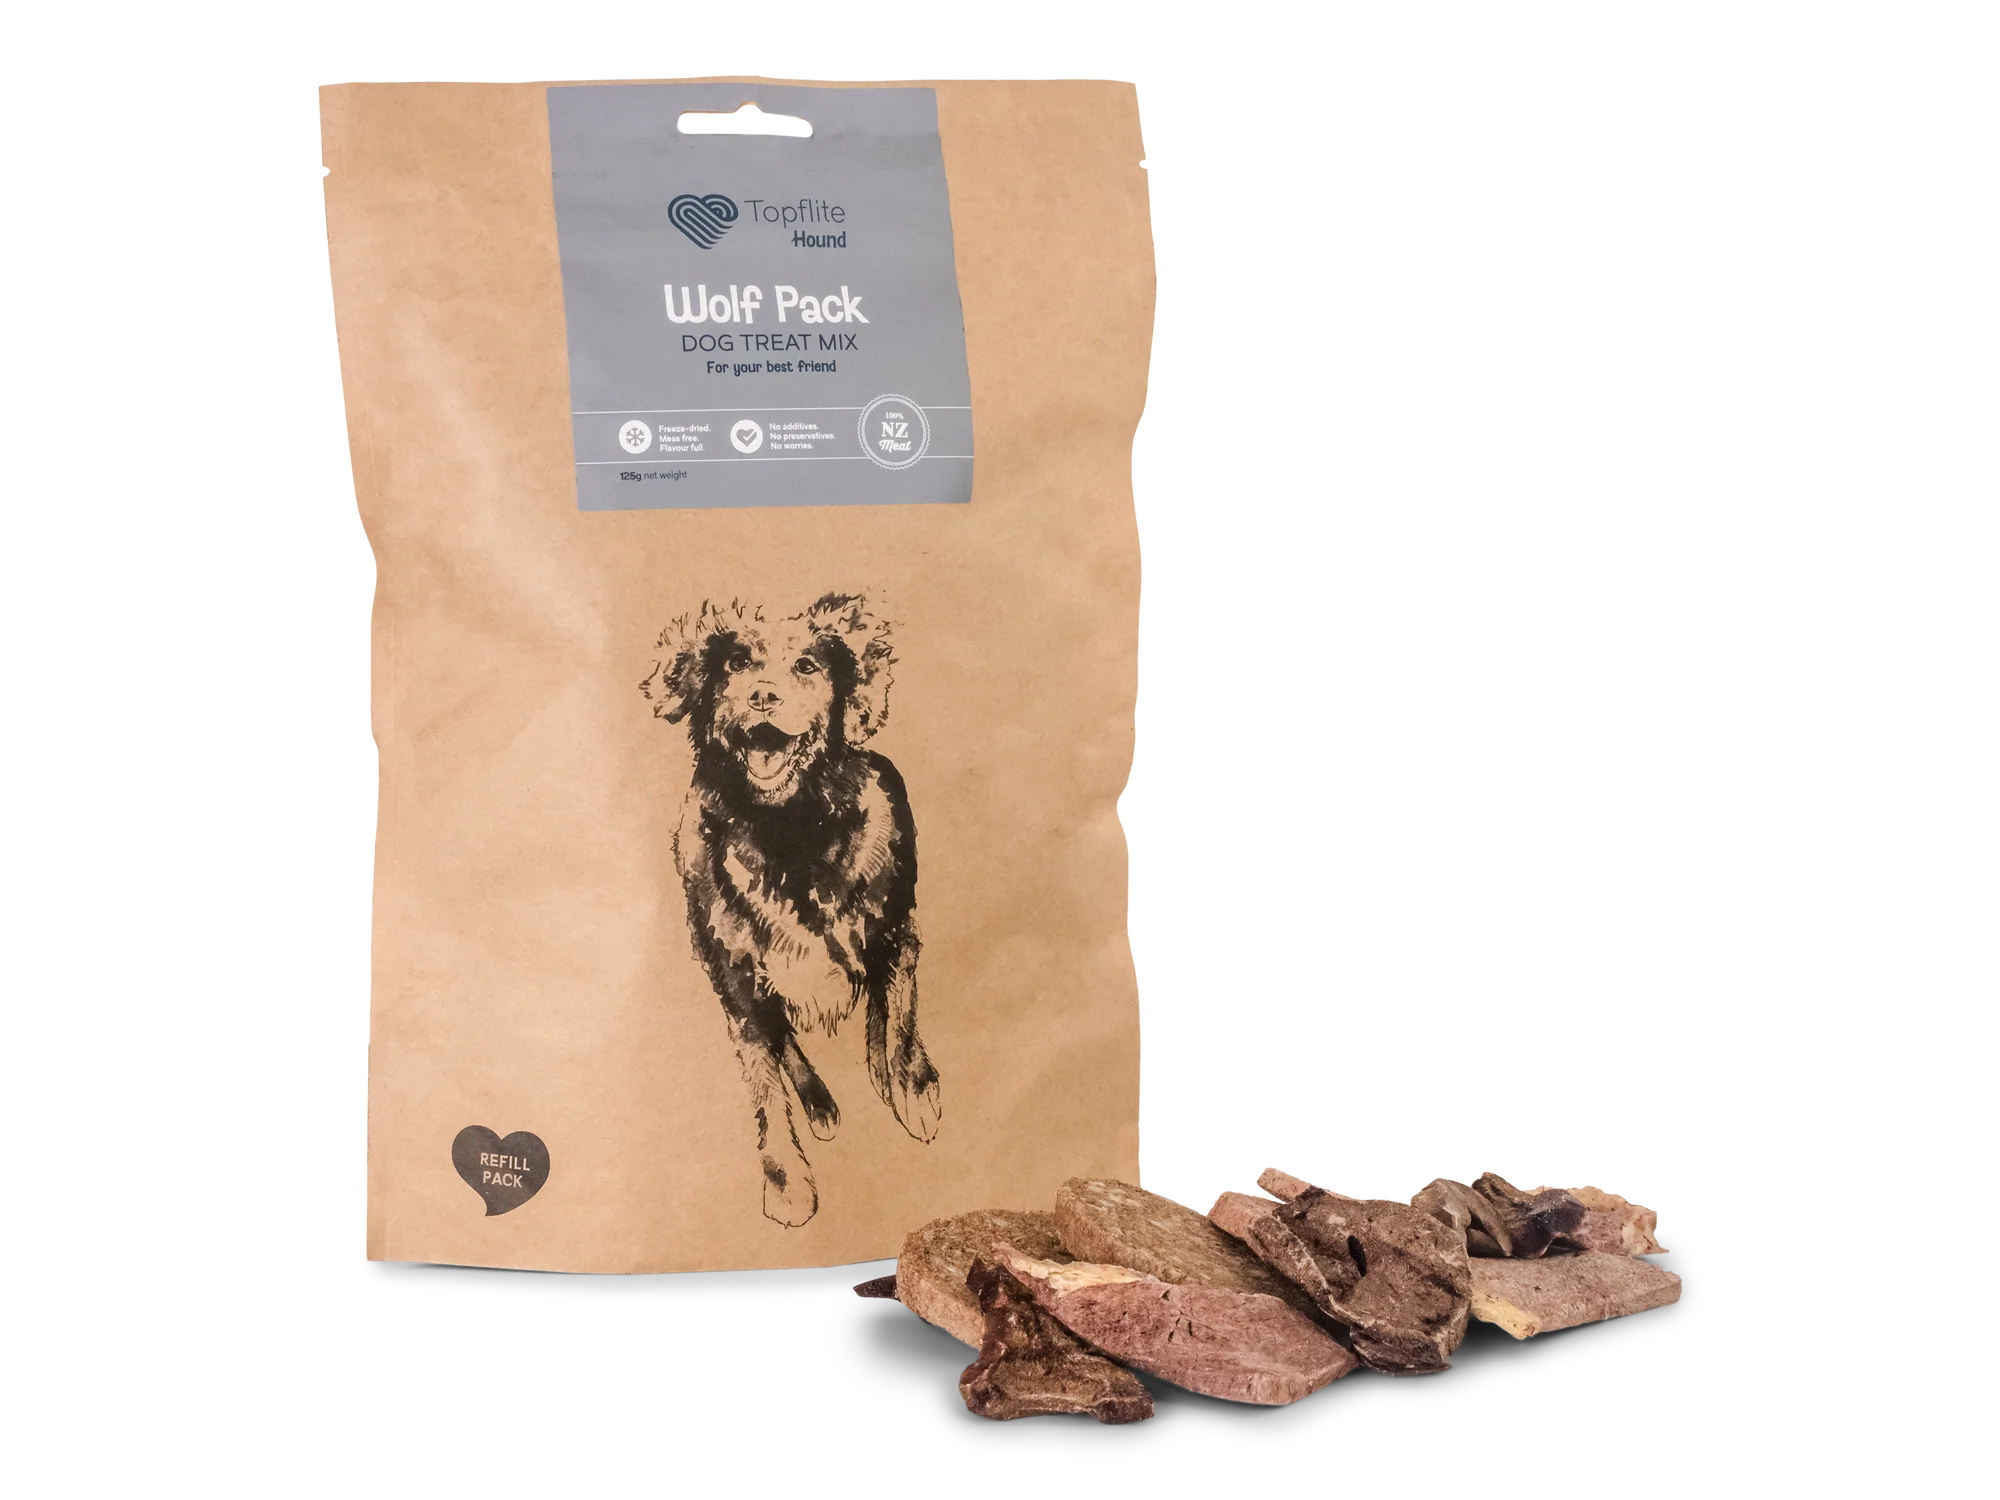 Topflite Hound Wolf Pack Snack Pack